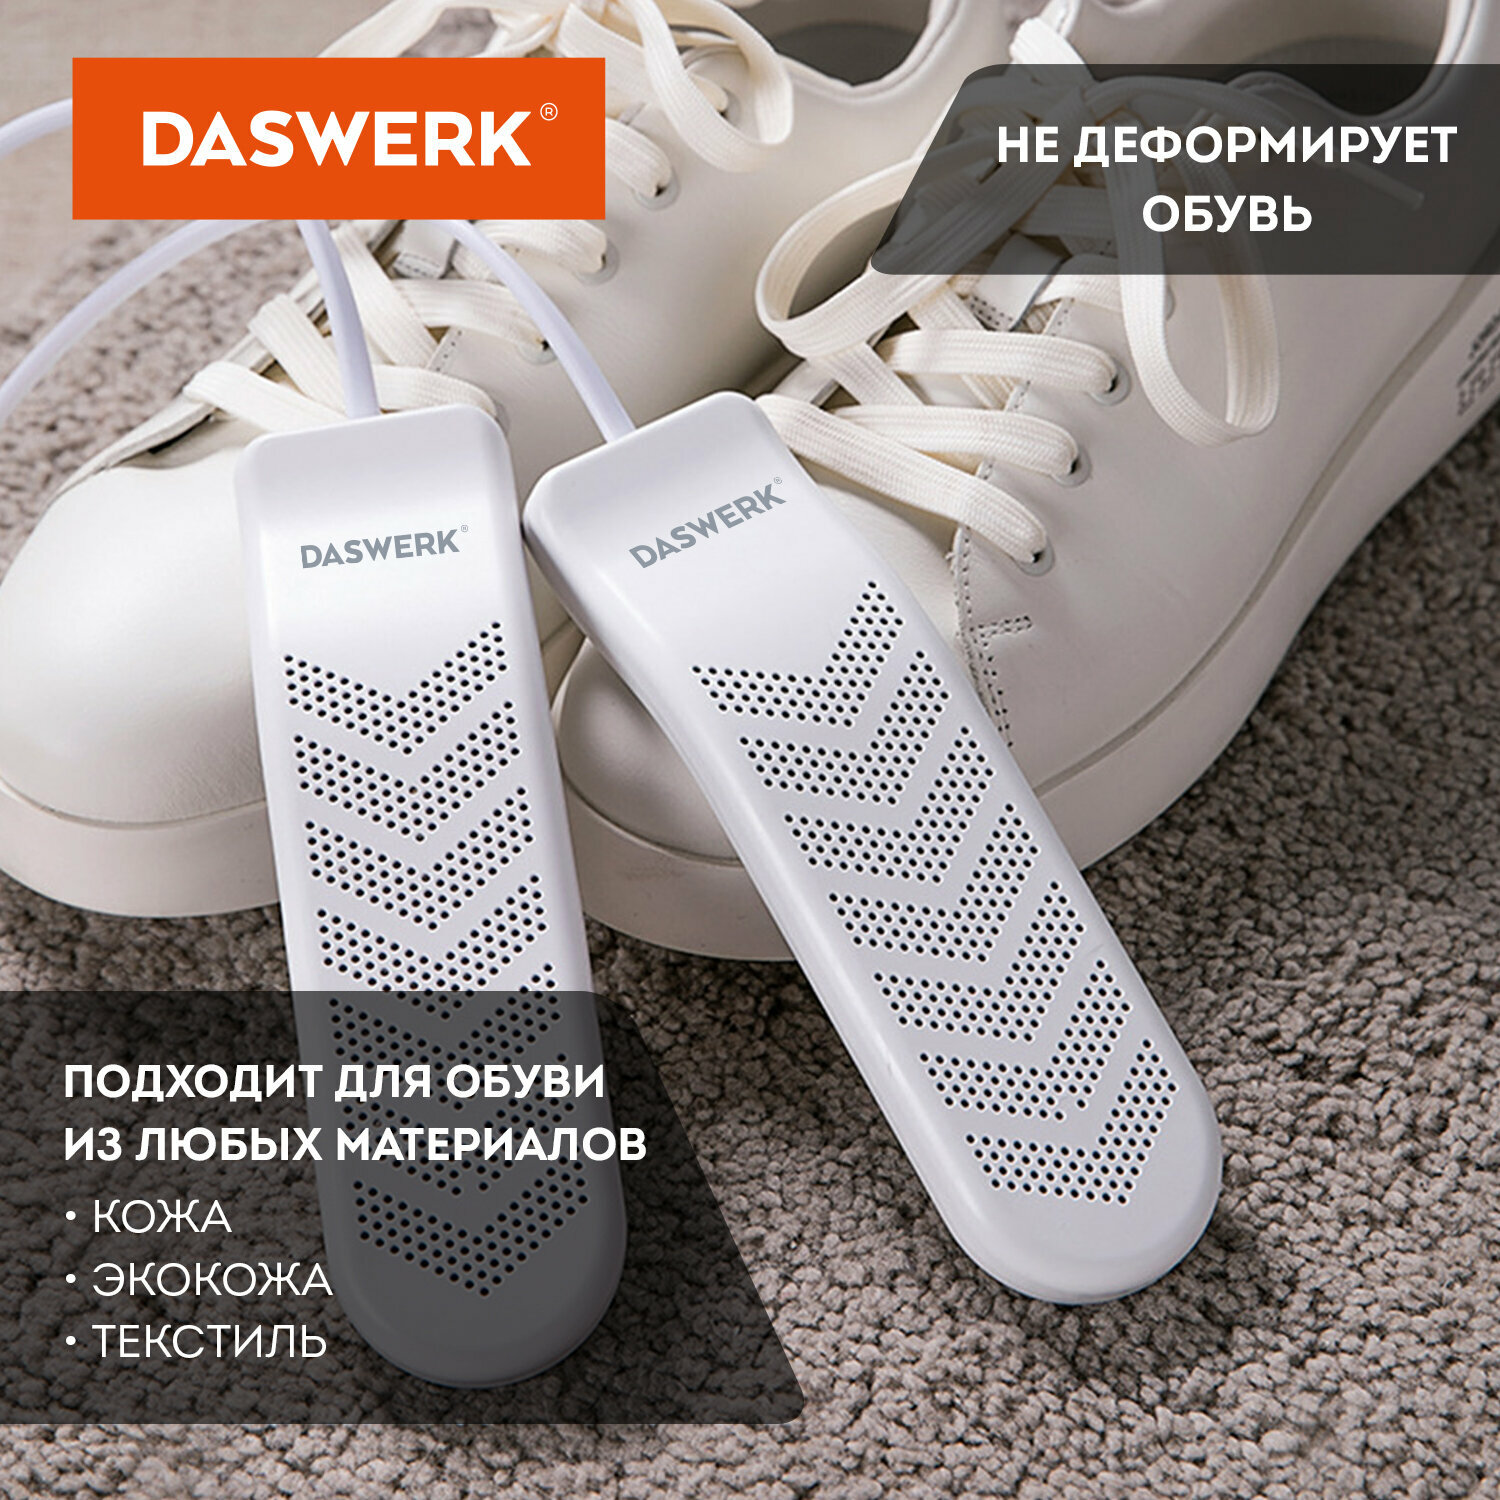 Cушилка для обуви, электрическая (сушка, электросушилка) от запаха с таймером, Usb-разъём, 9 Вт, Daswerk, Sd9, 456202 - фотография № 7